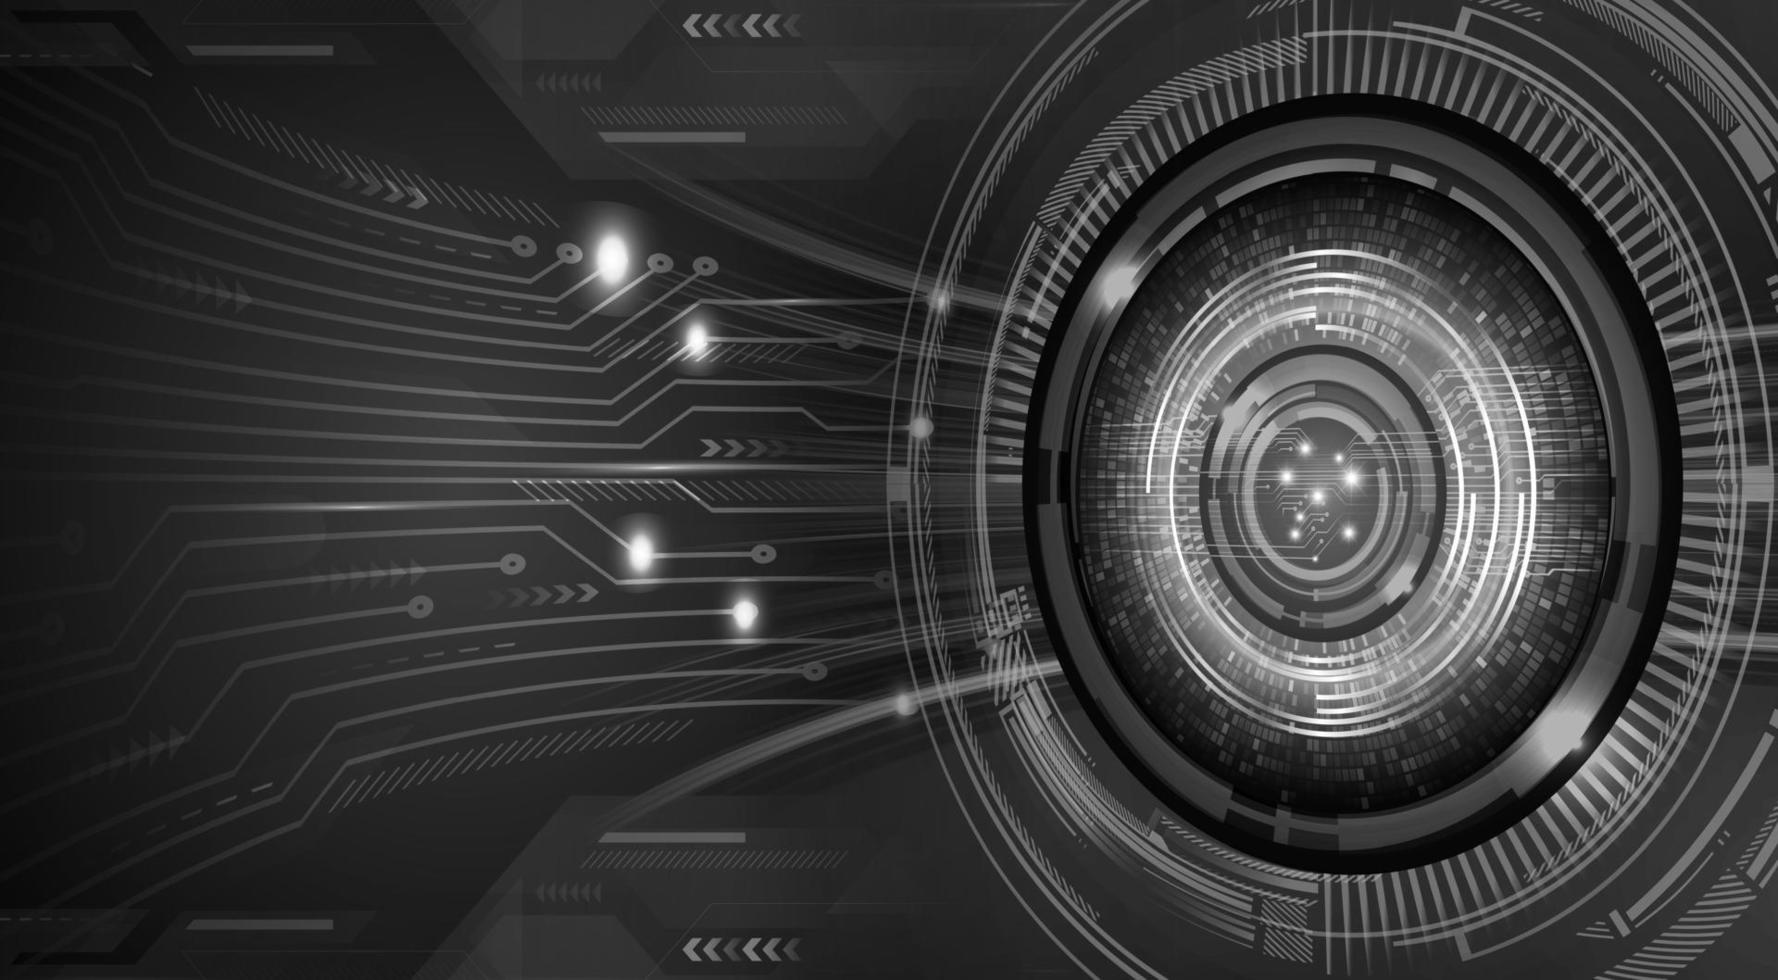 eye cyber circuit toekomstige technologie concept achtergrond vector